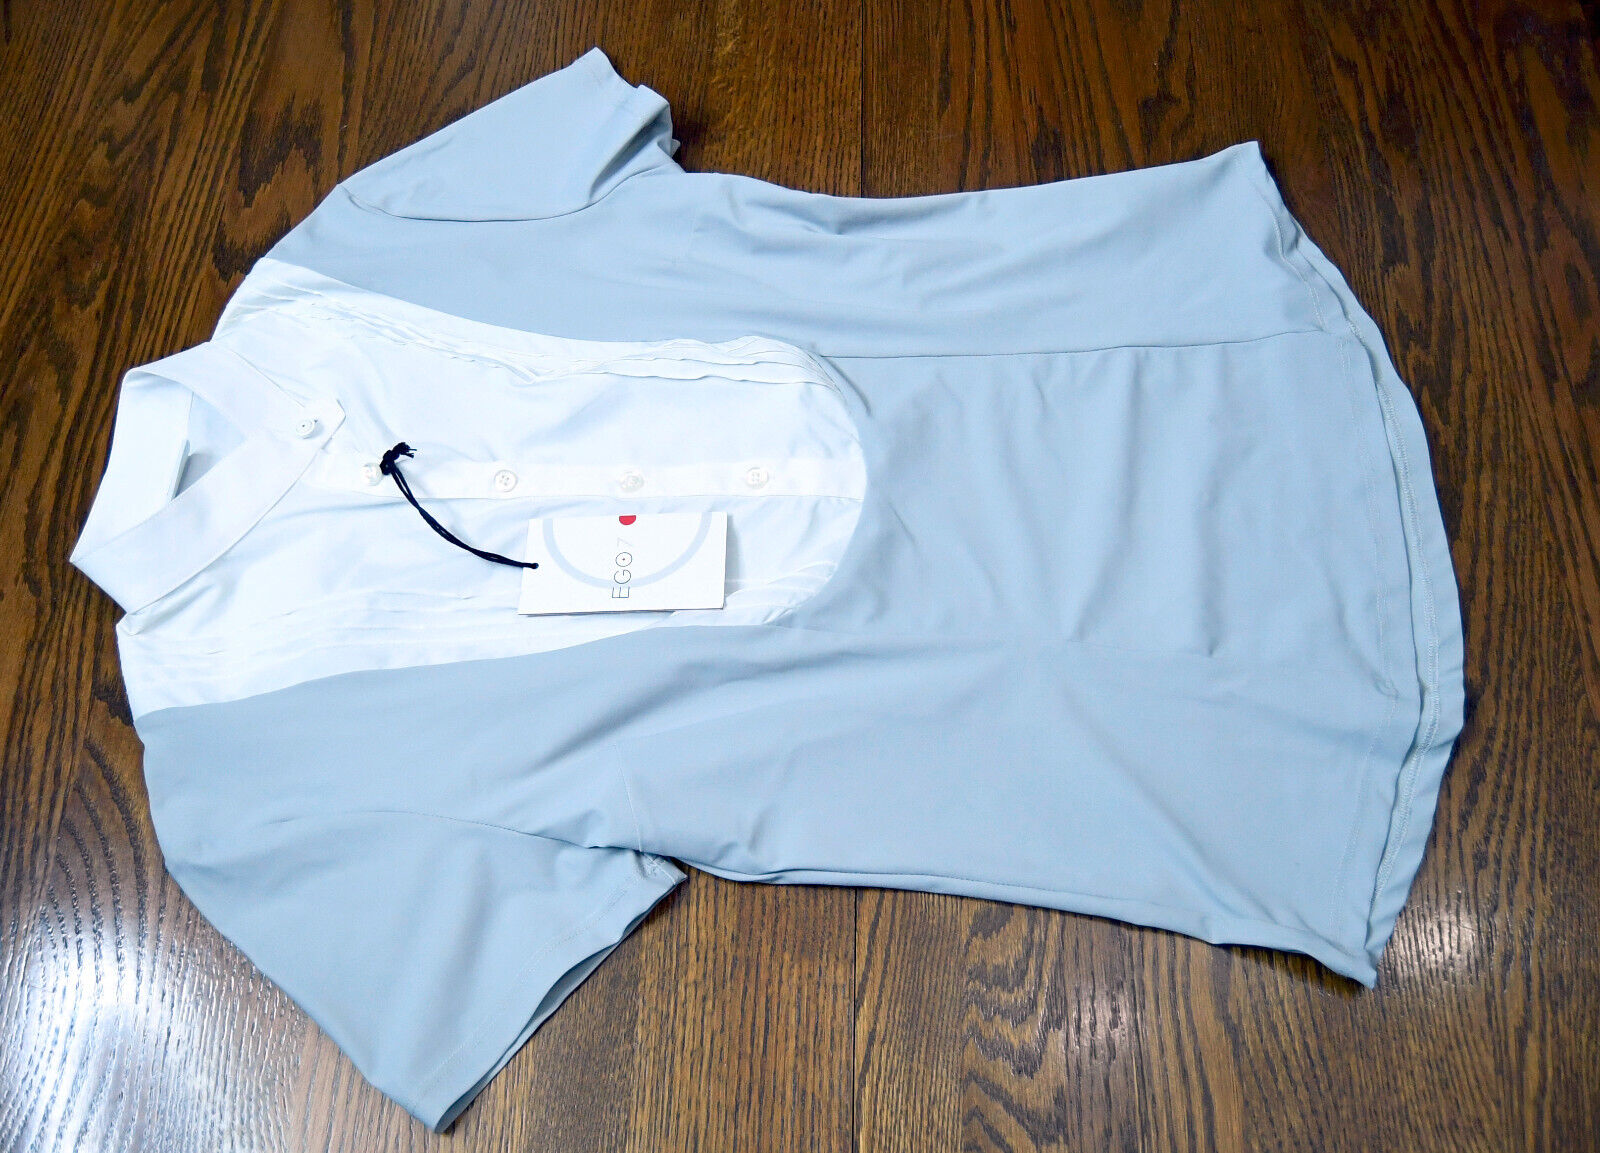 Ego7 New Bavero Show Shirt, Show Sleeve, Grey White, 44, $159.99